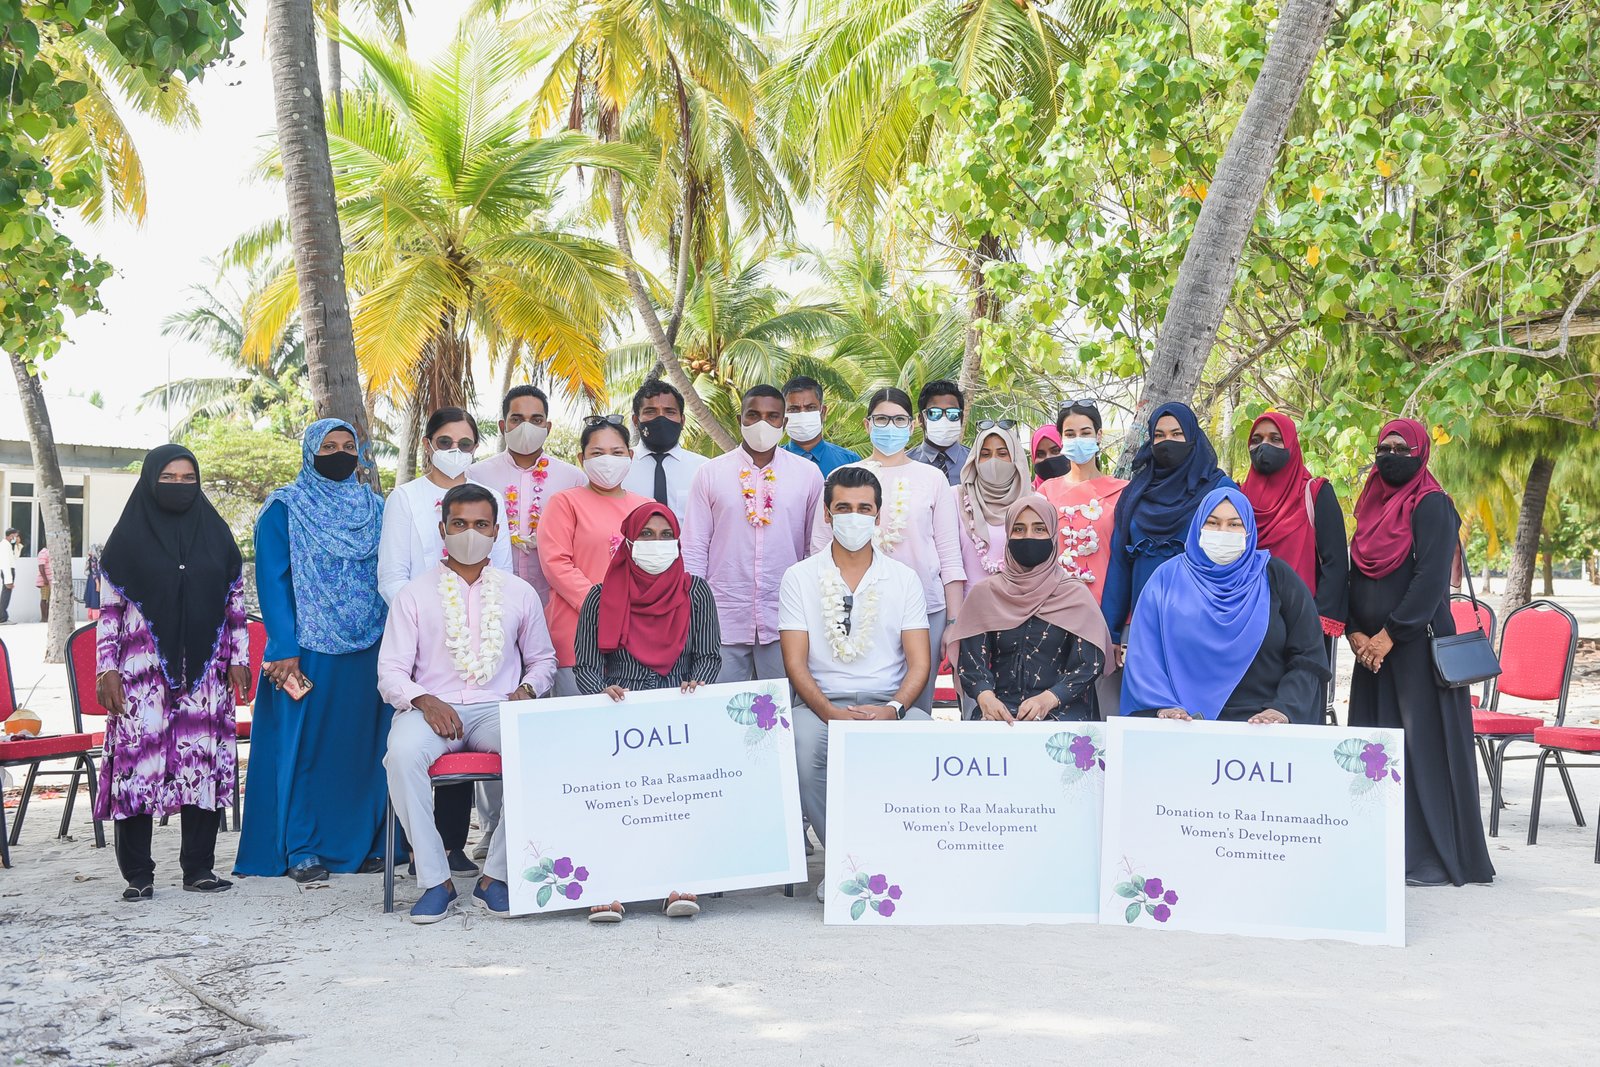 JOALI Donates to Three Women’s Development Committees in Raa Atoll